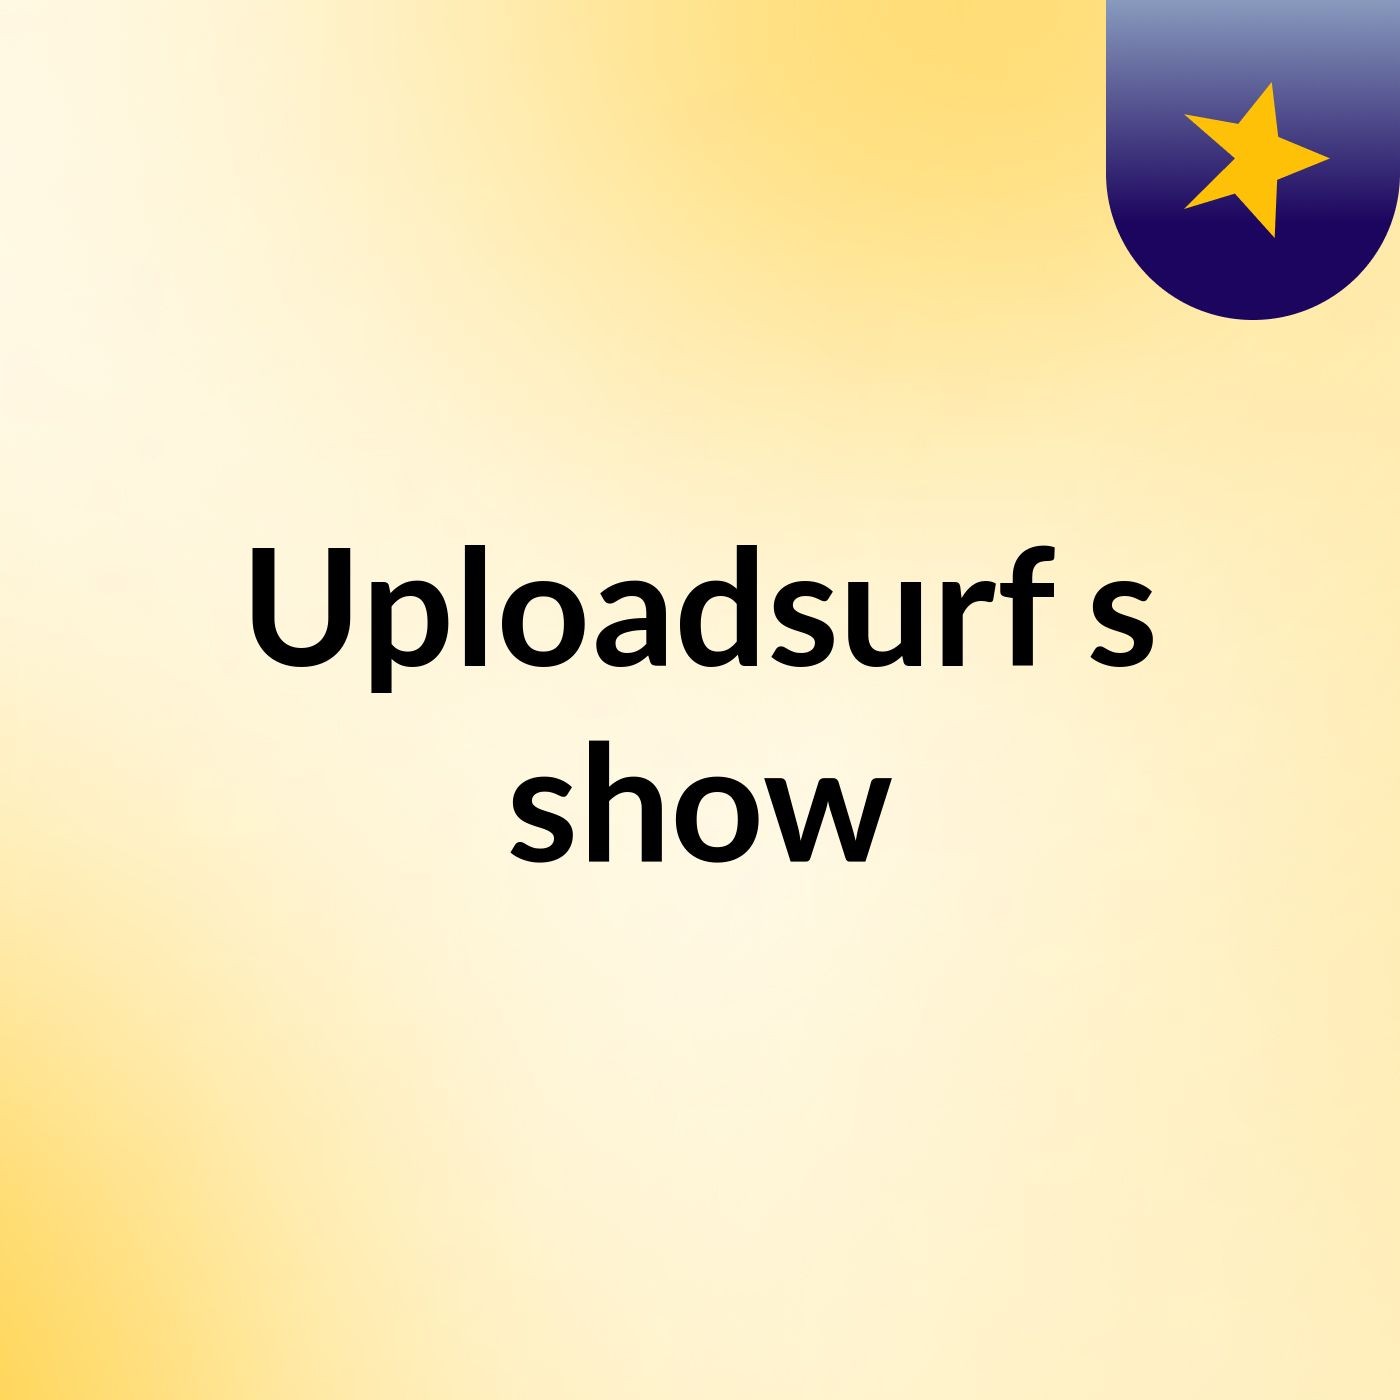 Uploadsurf's show